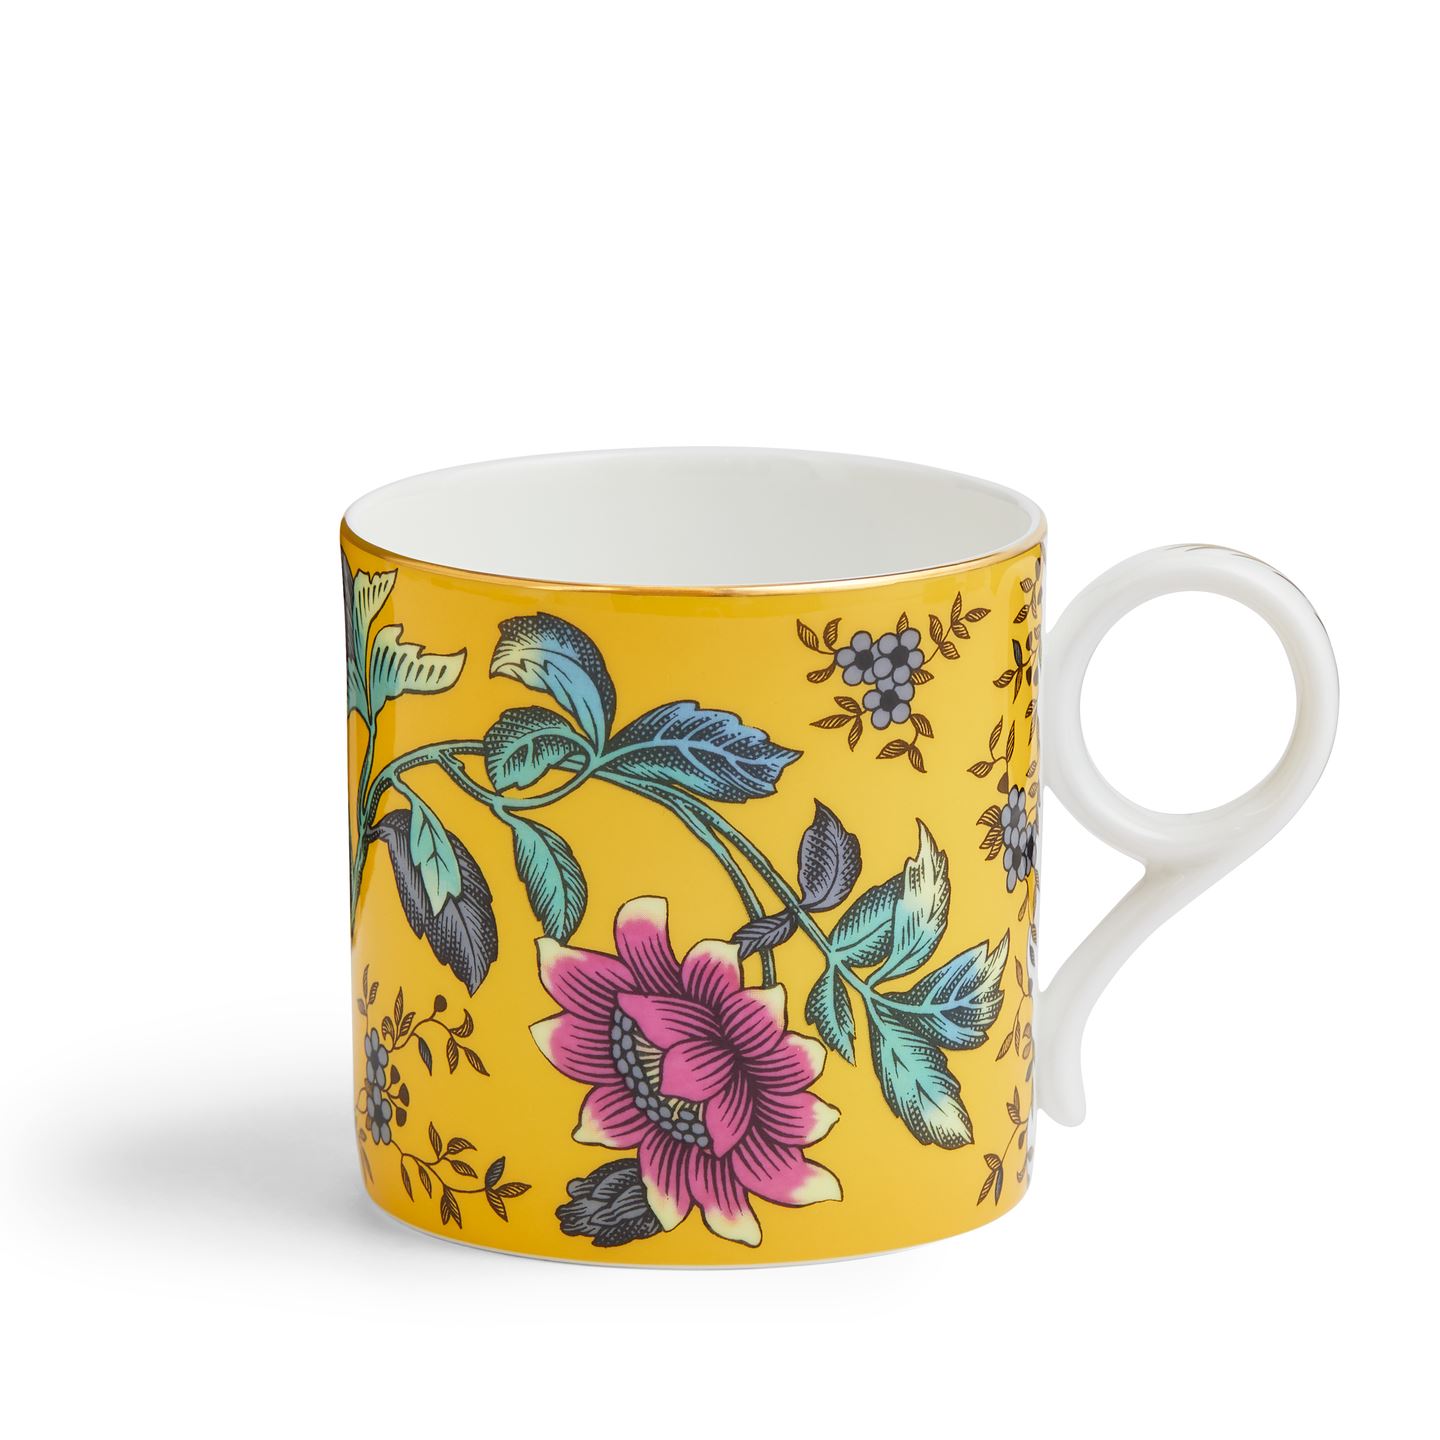 Wonderlust Collection - Mugs, Teacups, Plates - Wedgwood®